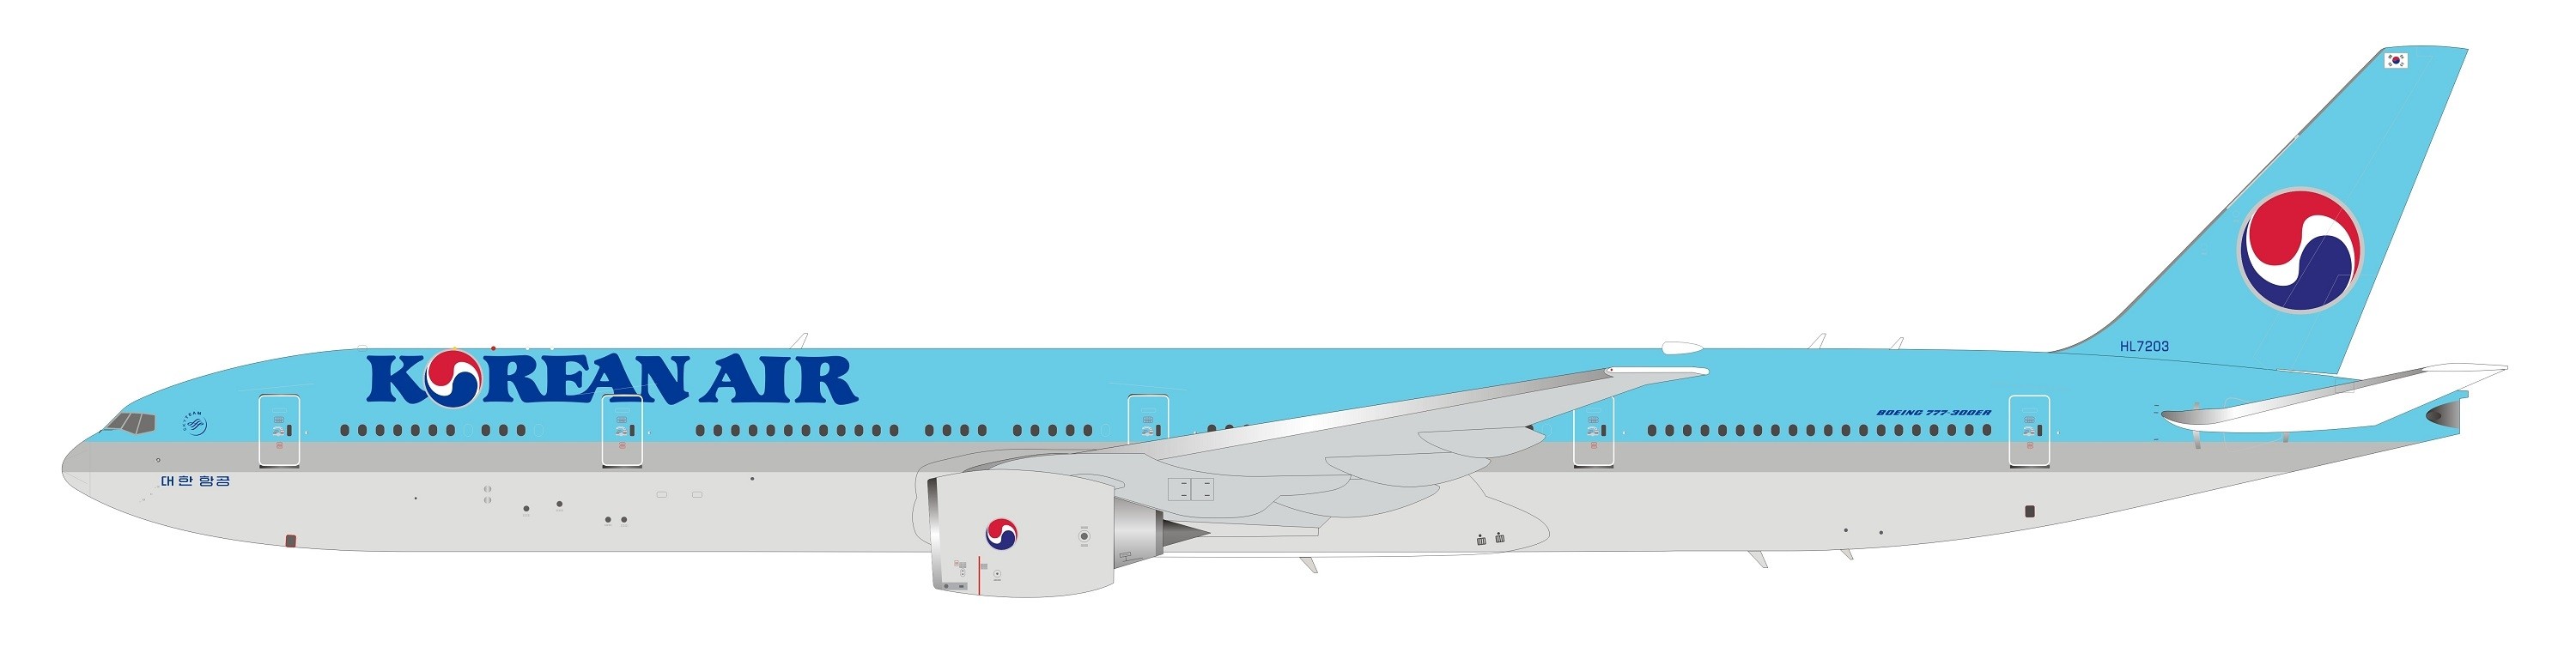 Korean Air Boeing 777-3B5ER HL7203 stand InFlight B-773-KL-0119 scale 1:200